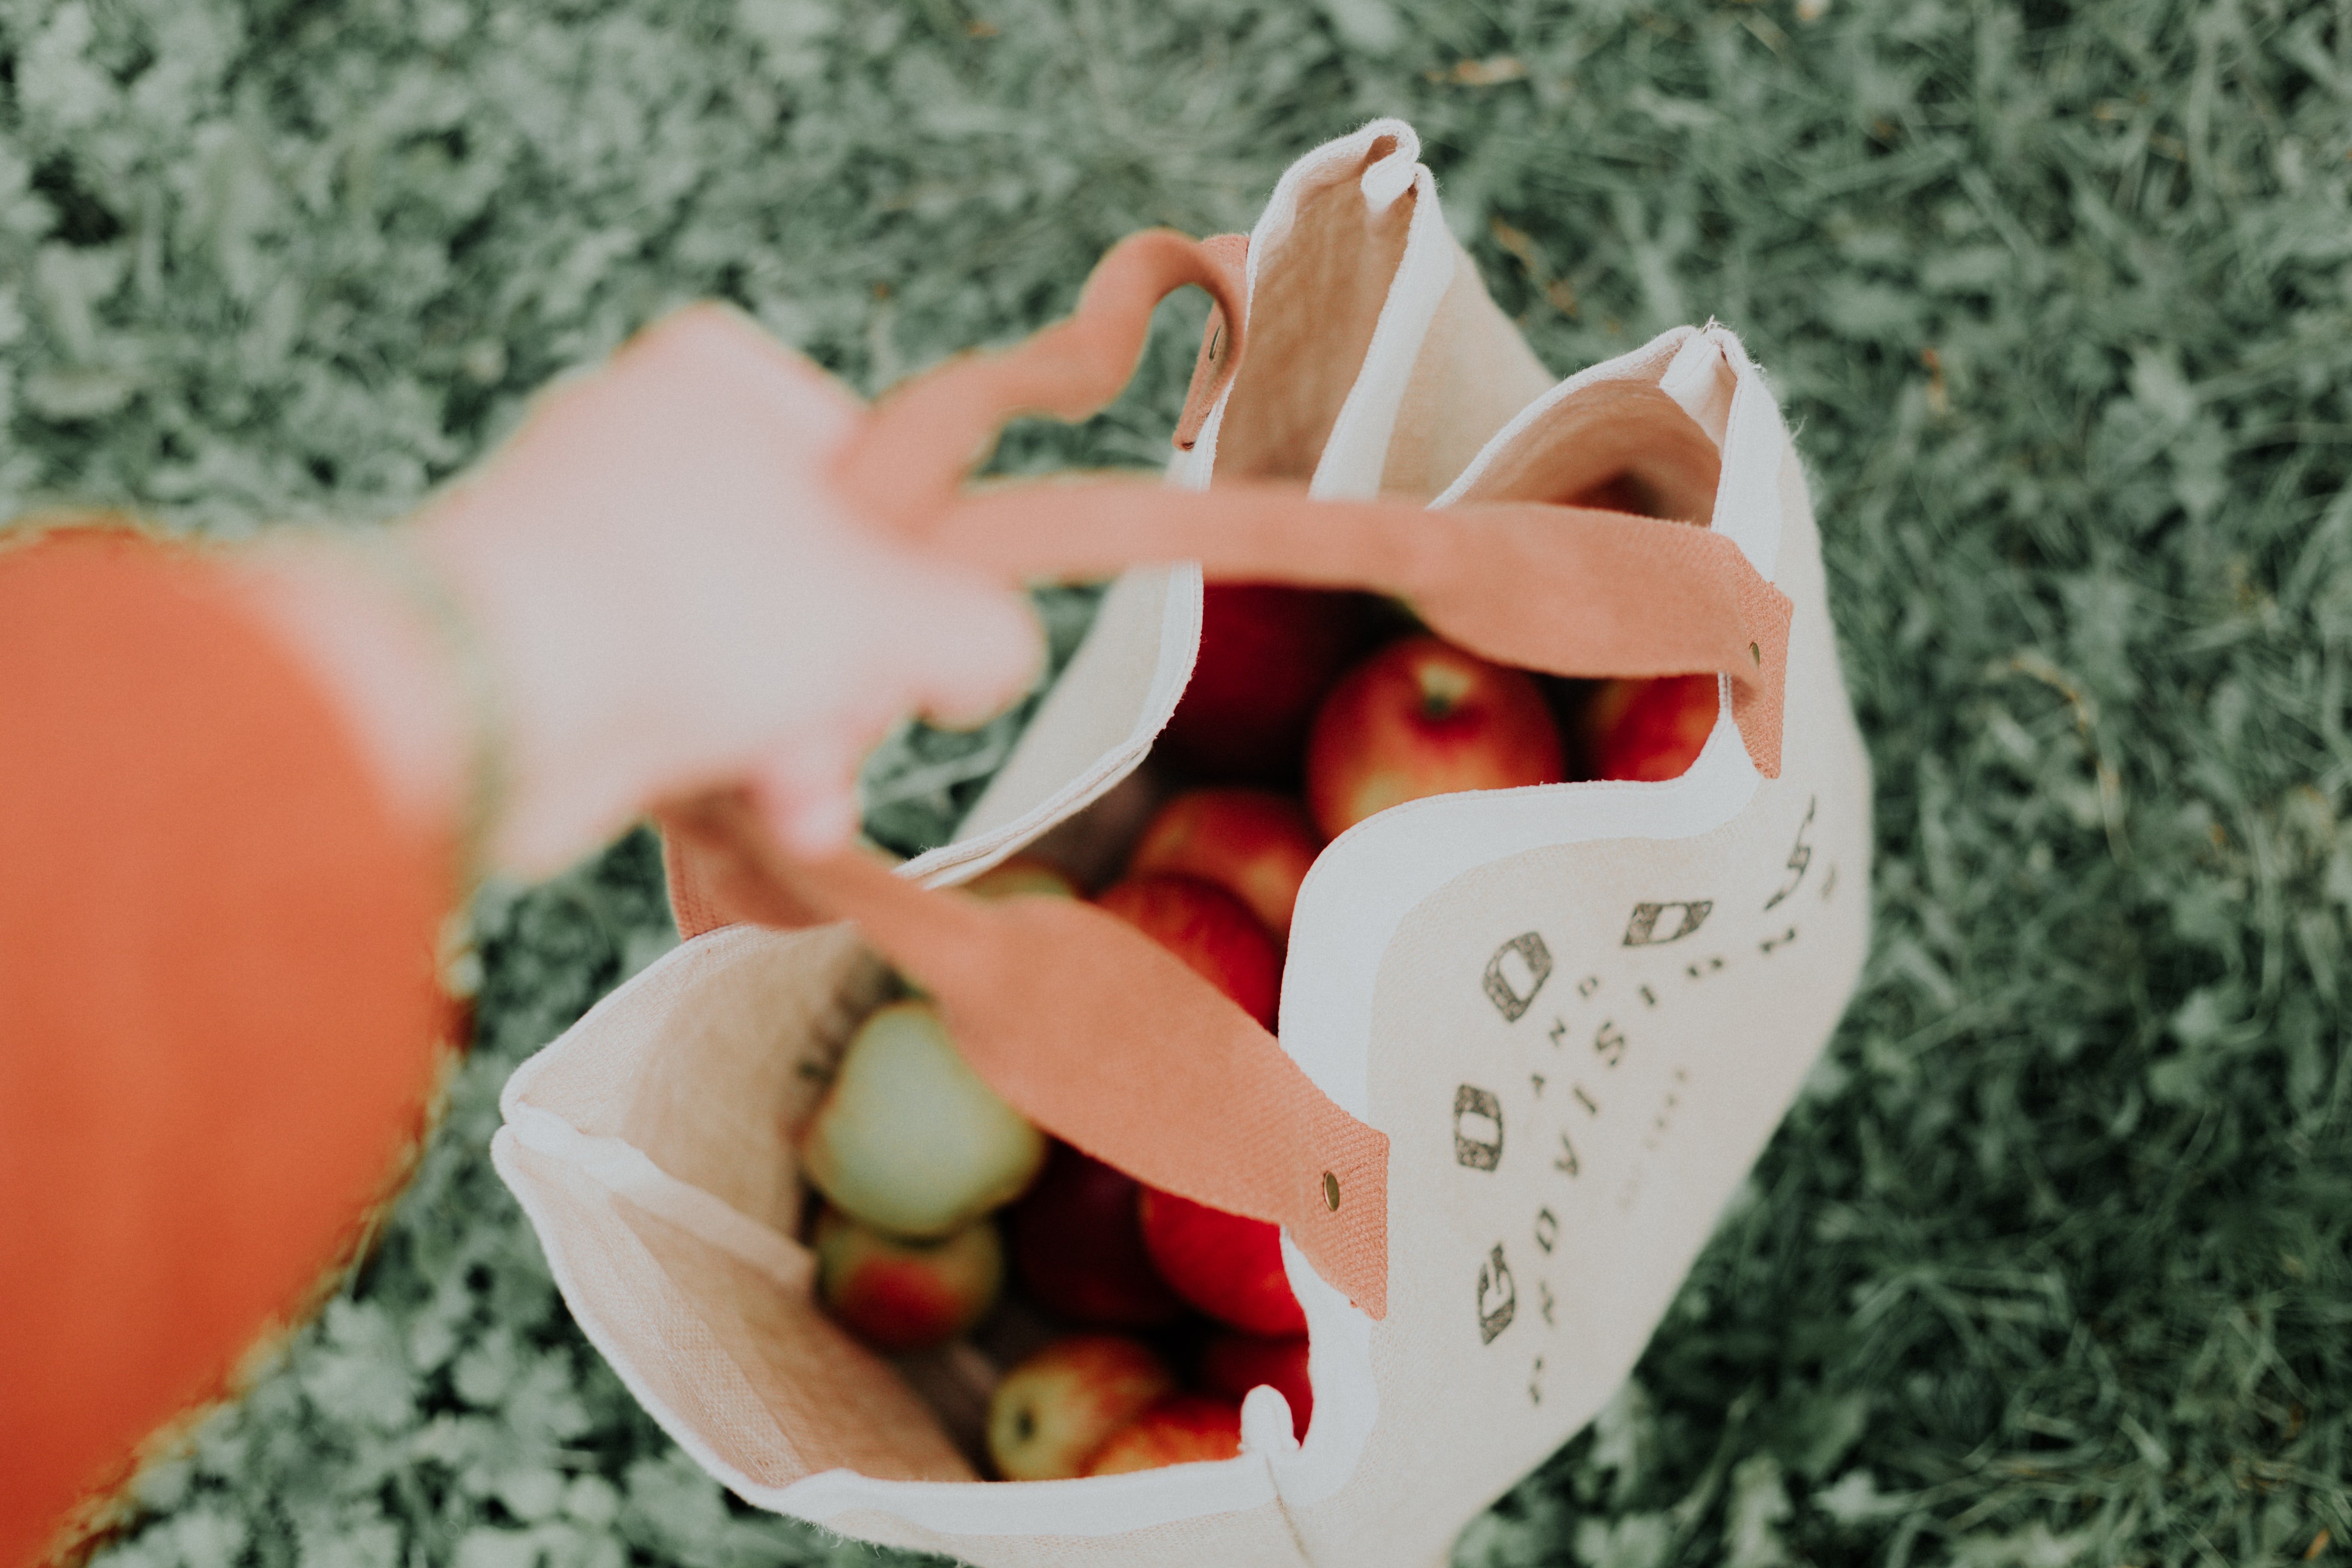 Peter took home a bag of fruit. | Source: Unsplash